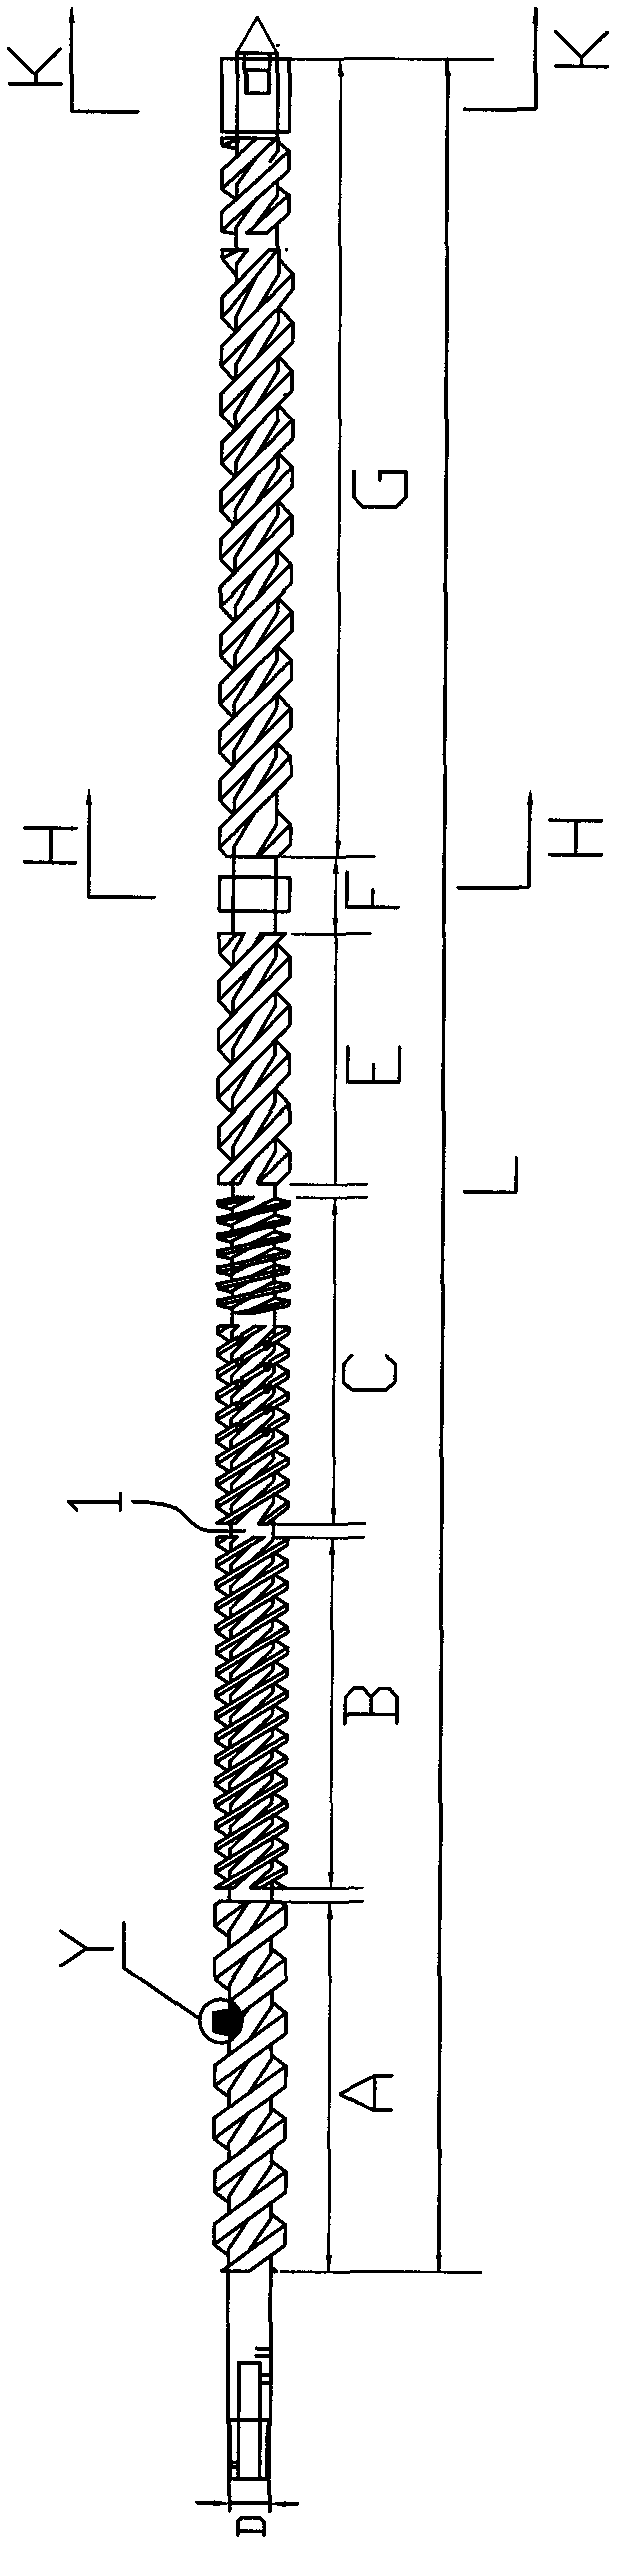 Screws used in twin-screw foaming extruder